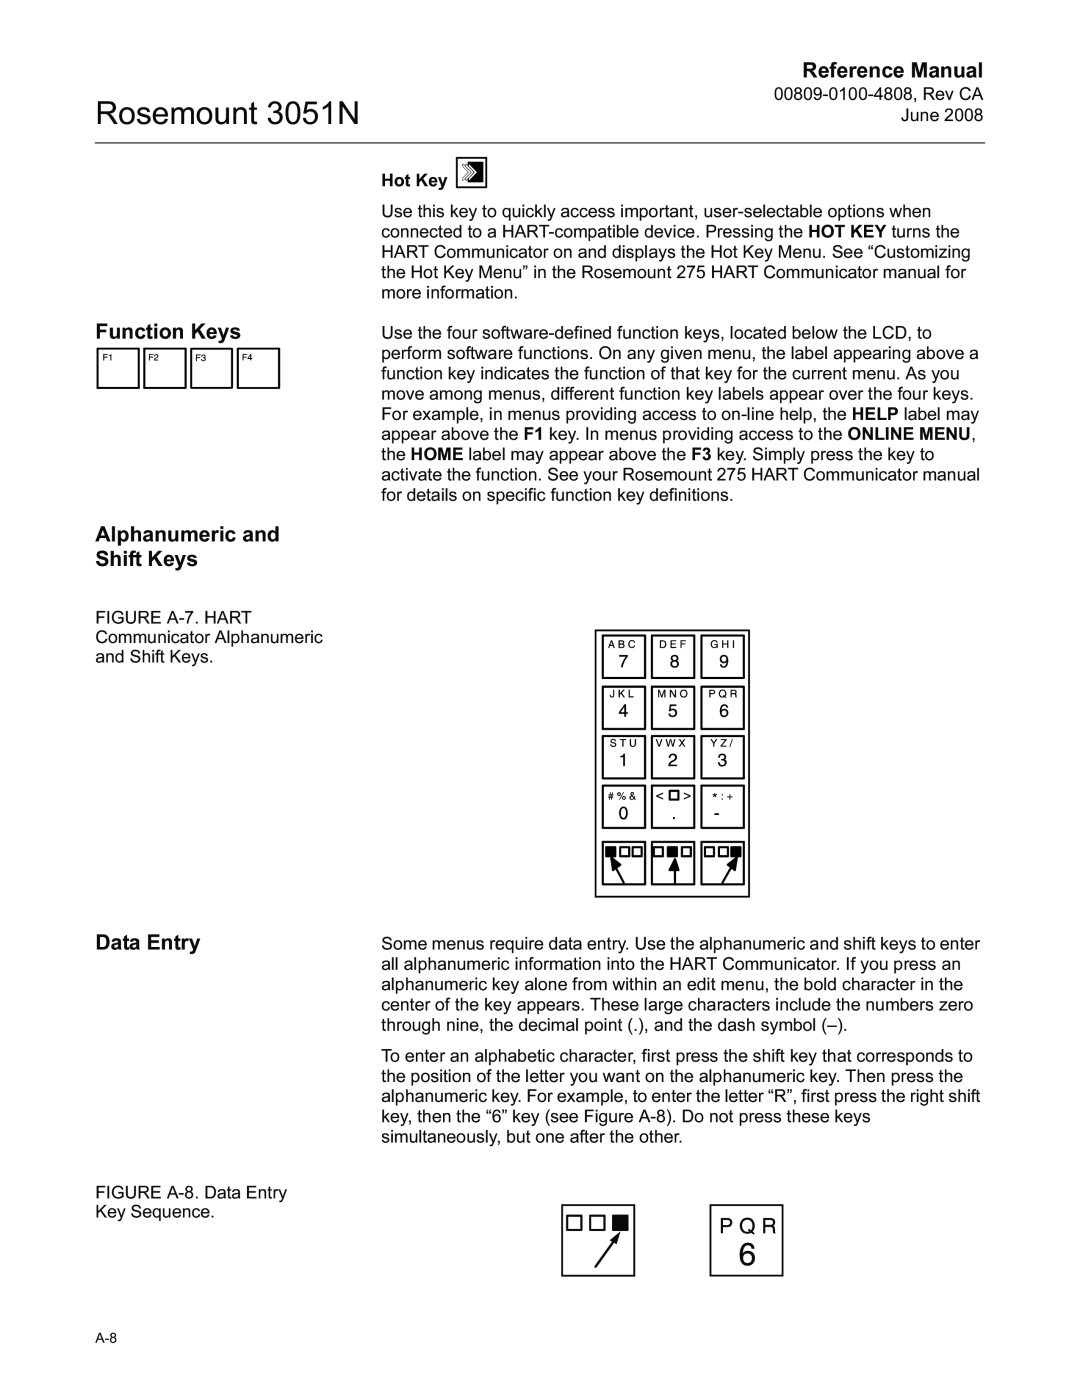 Emerson manual Function Keys, Alphanumeric and Shift Keys, Data Entry, Rosemount 3051N, Reference Manual 